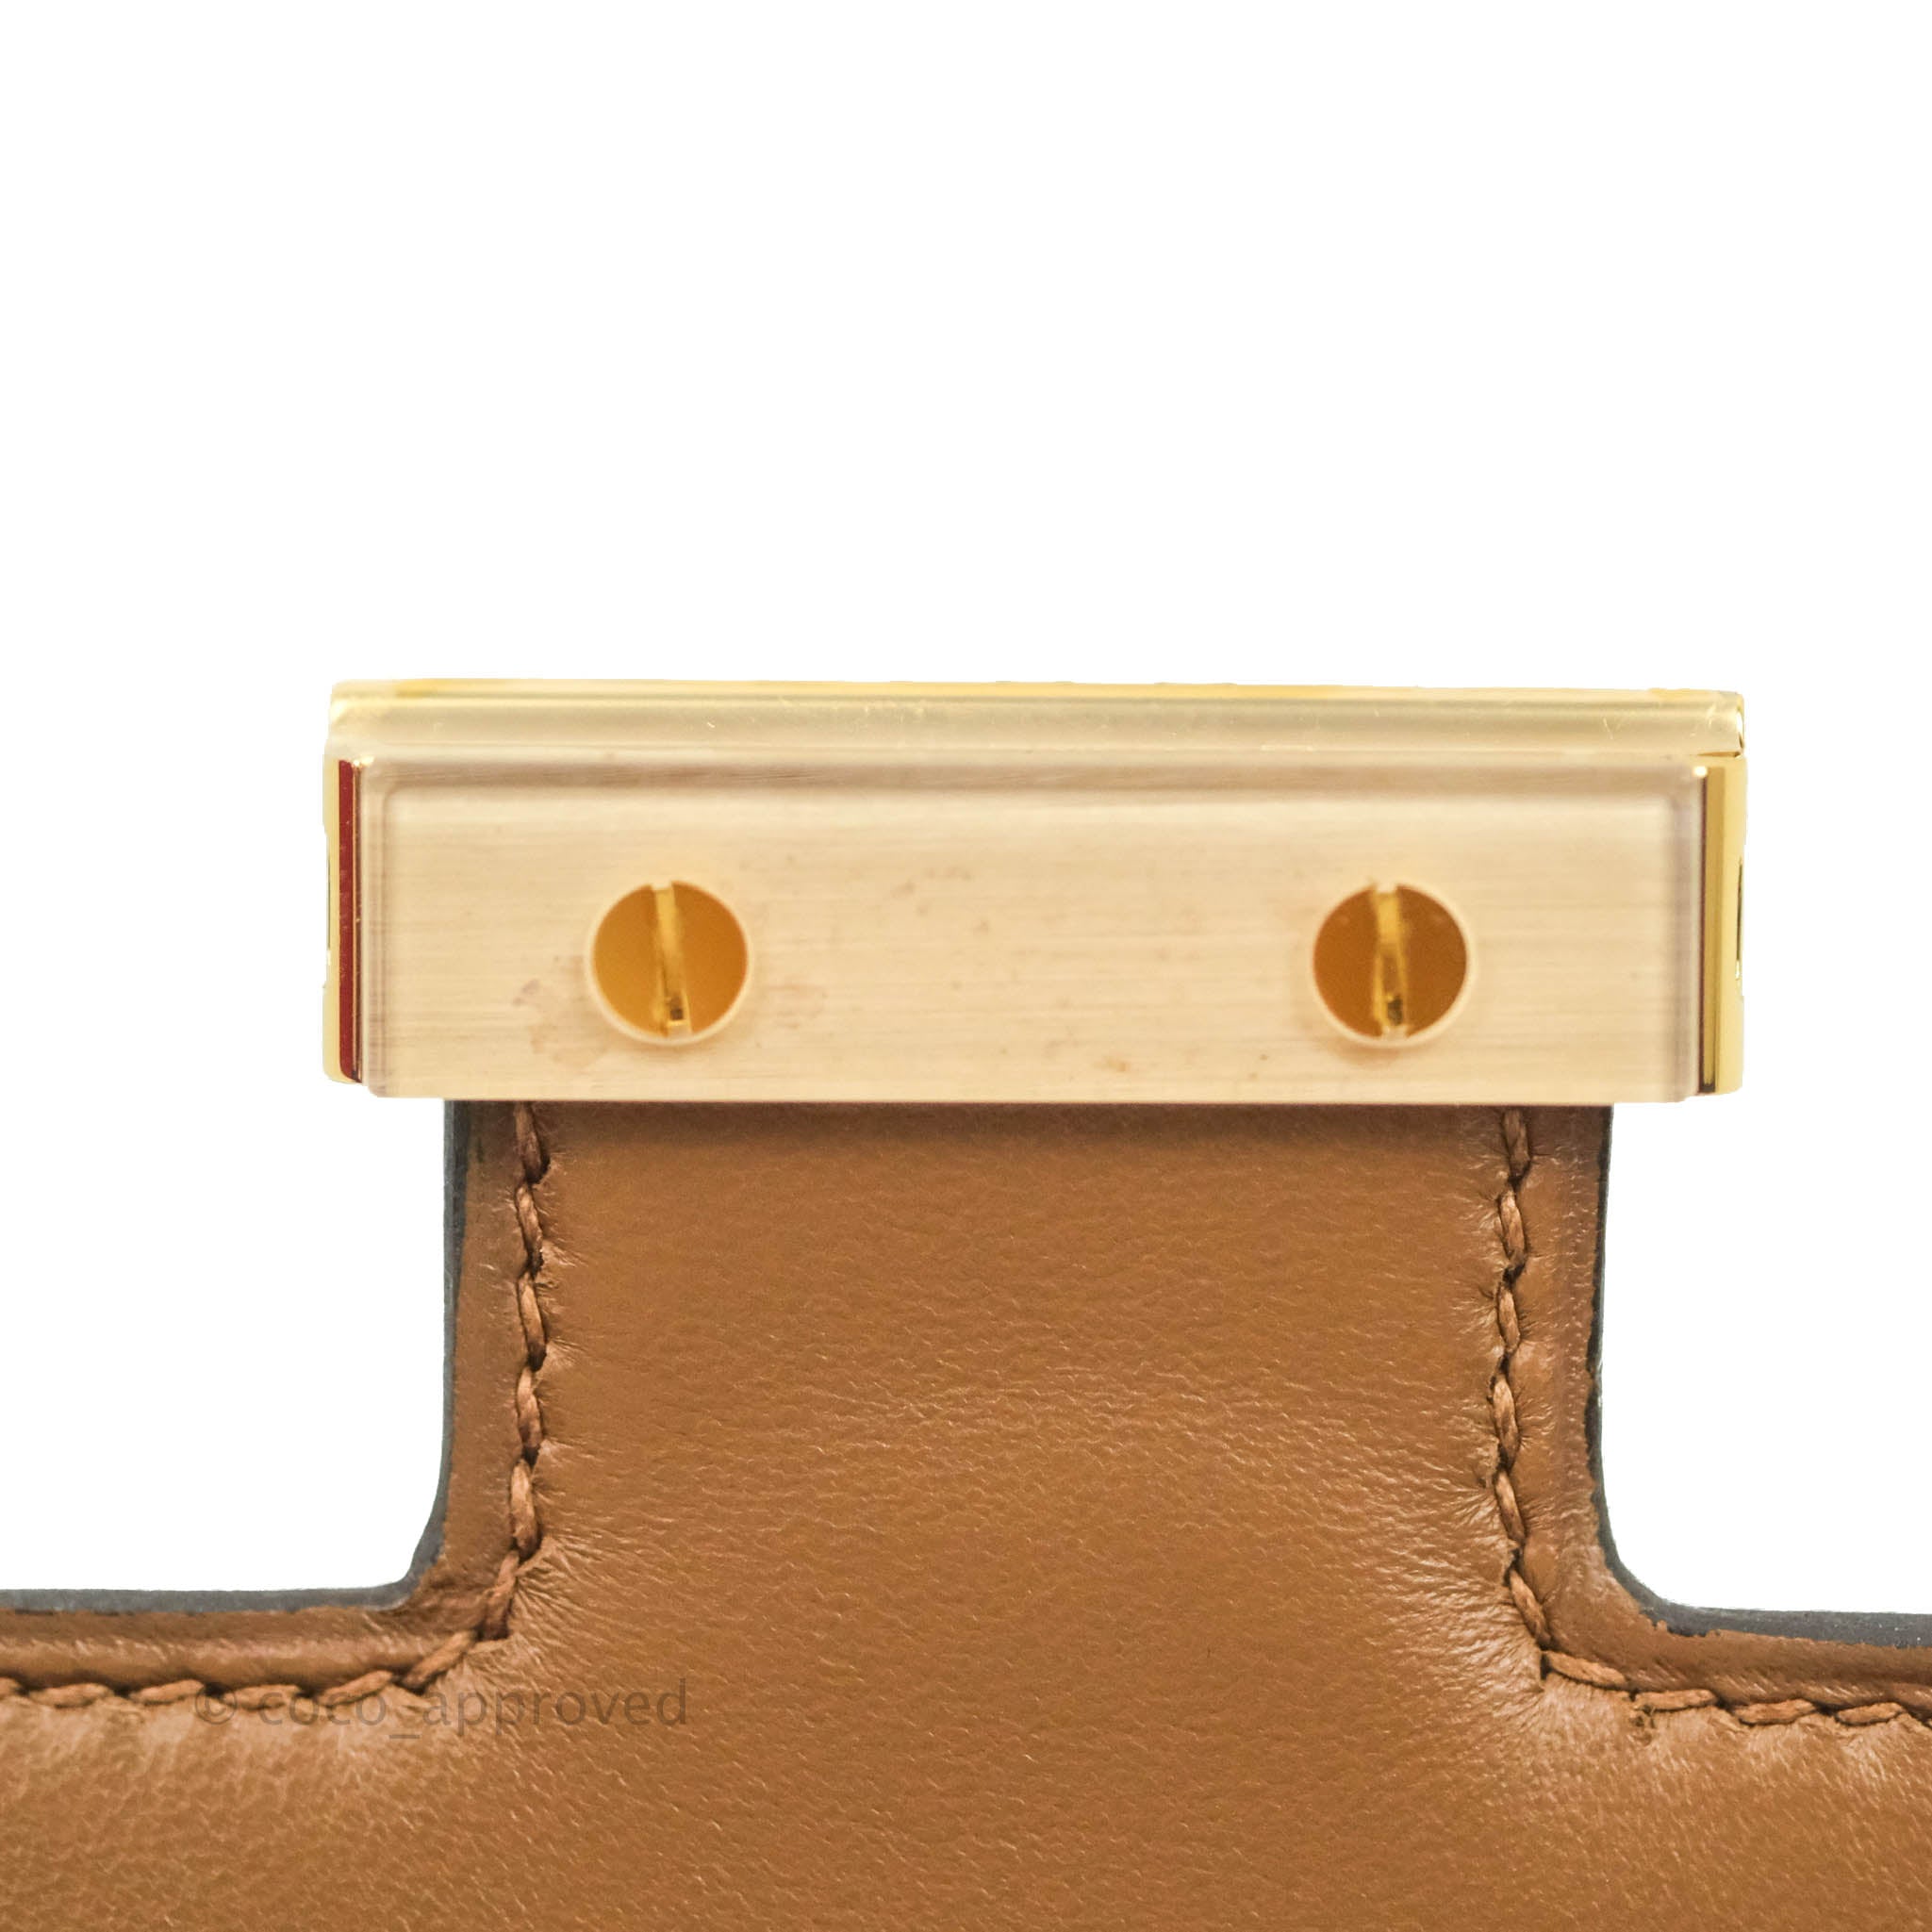 Hermès Constance Mini 18cm Alezan Epsom Gold Hardware – Coco Approved Studio